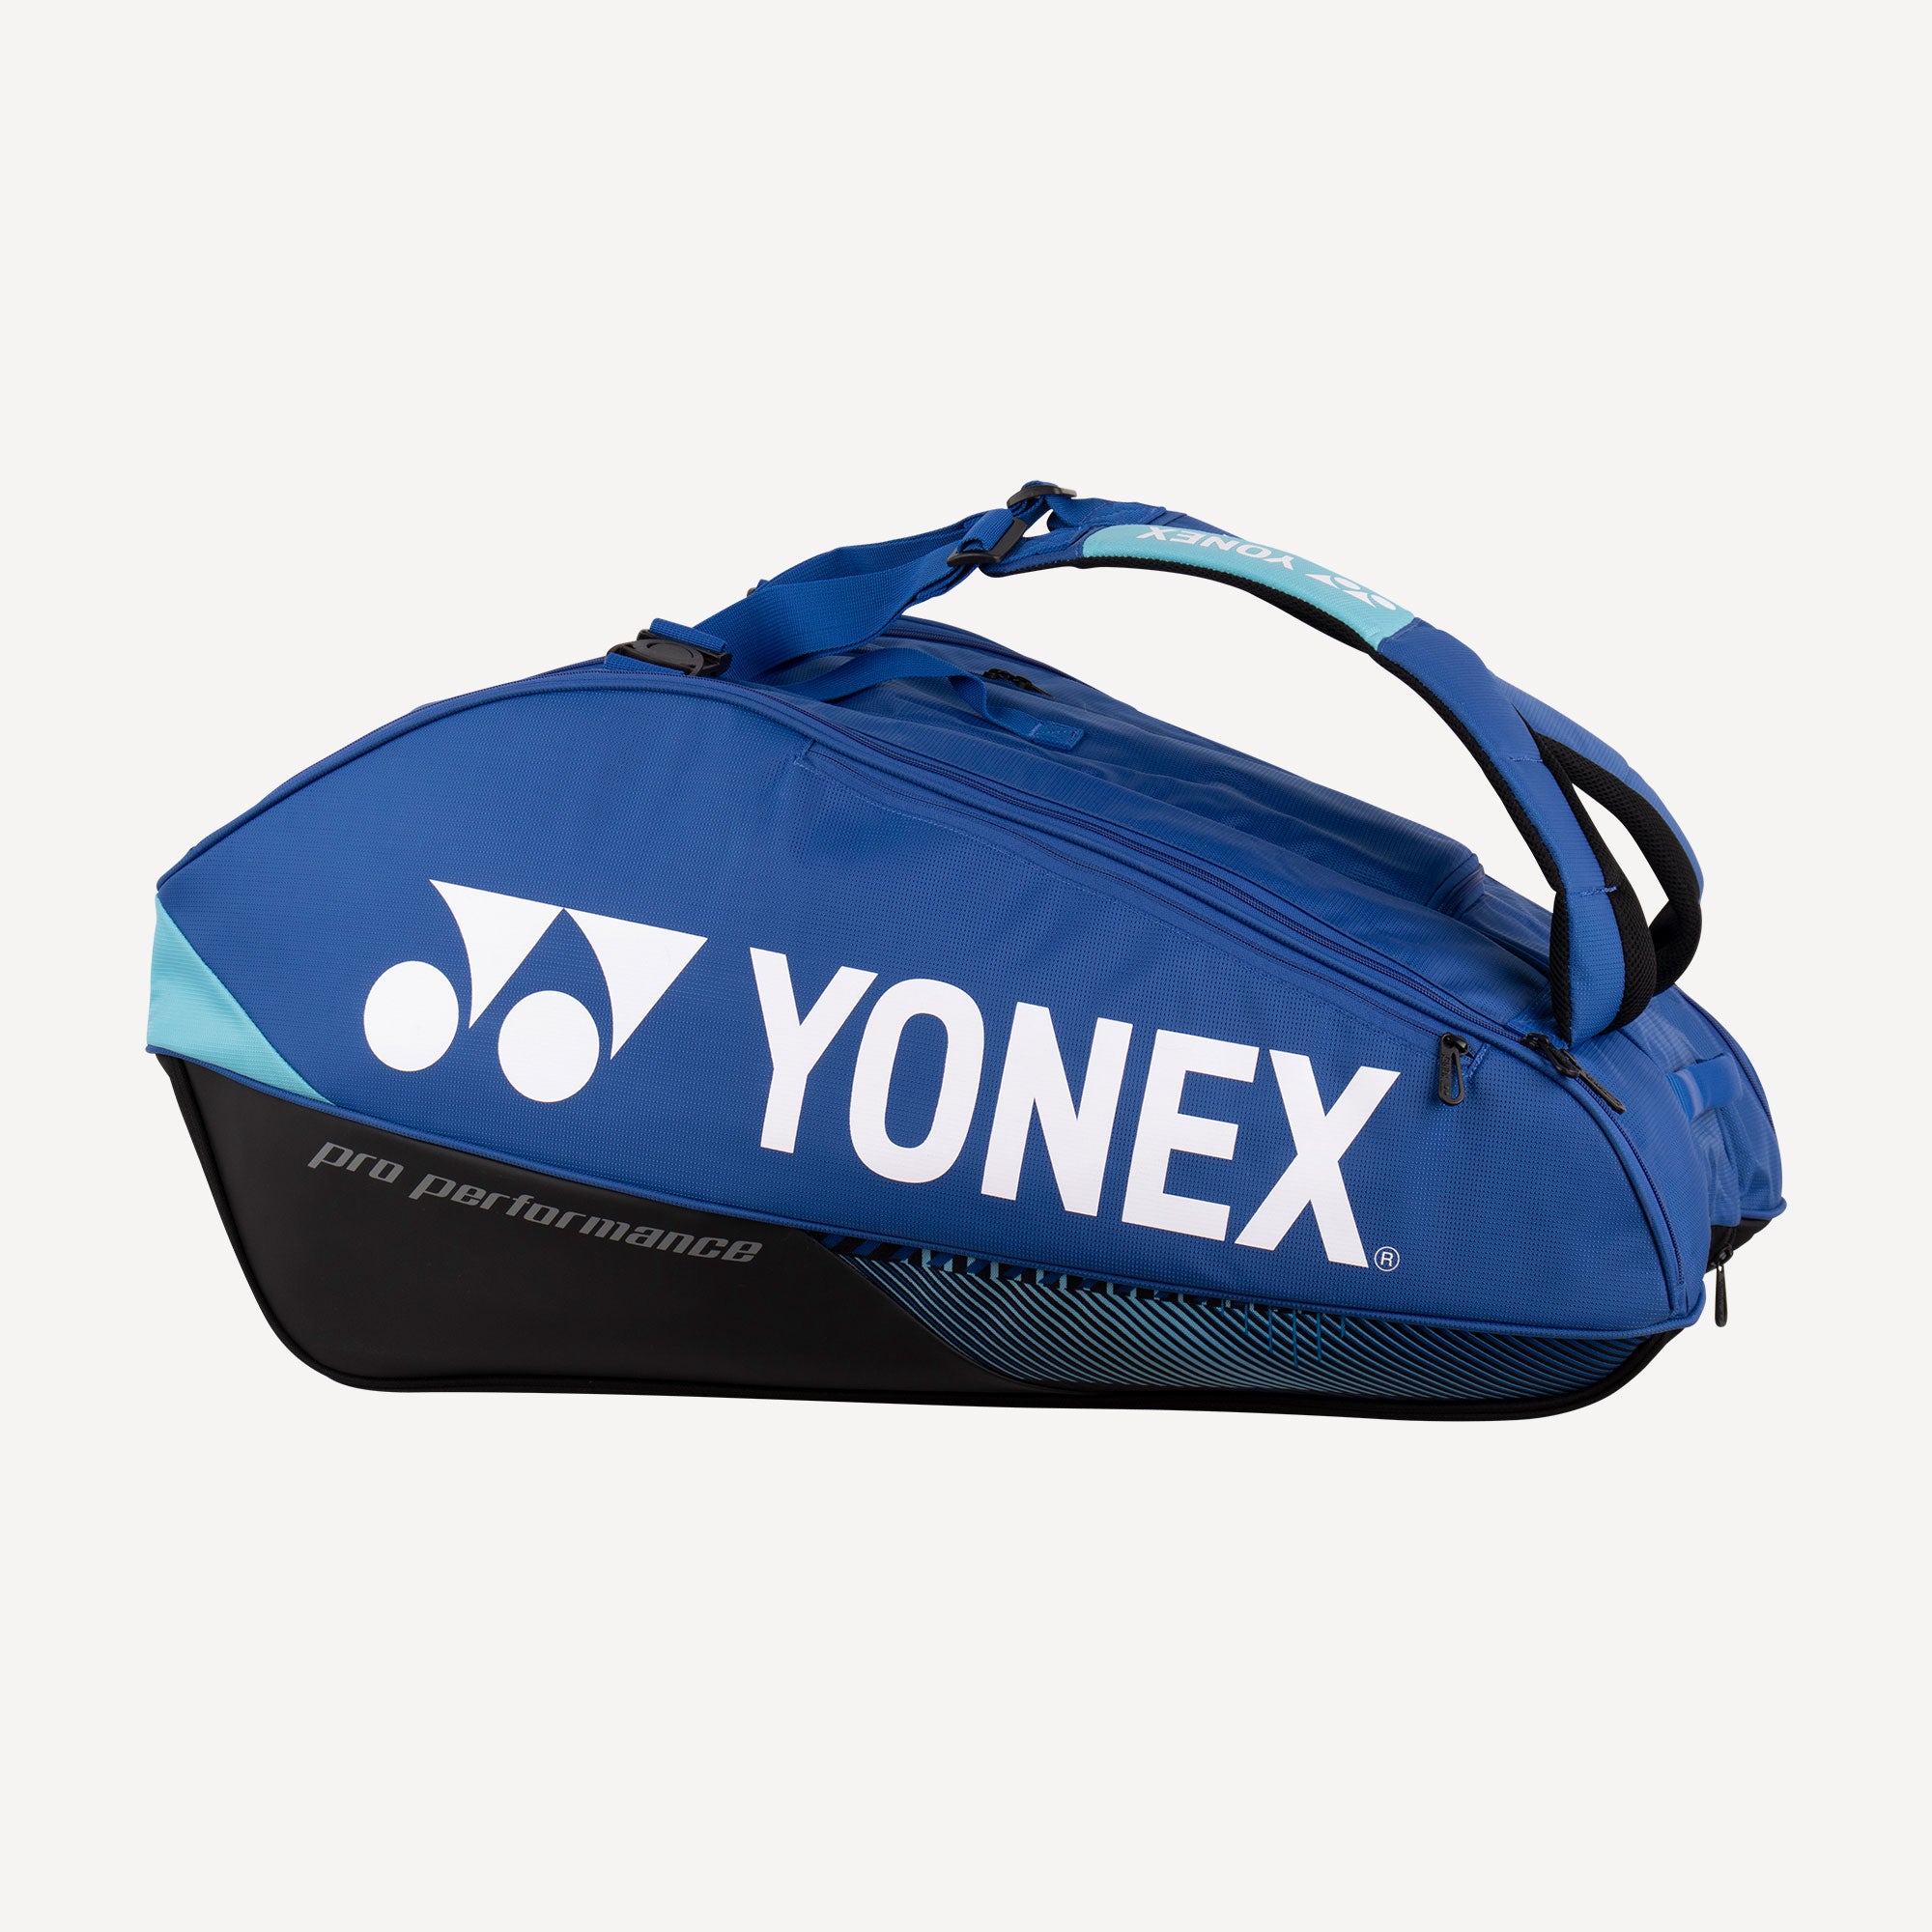 Yonex Pro 9 Racket Tennis Bag - Blue (2)